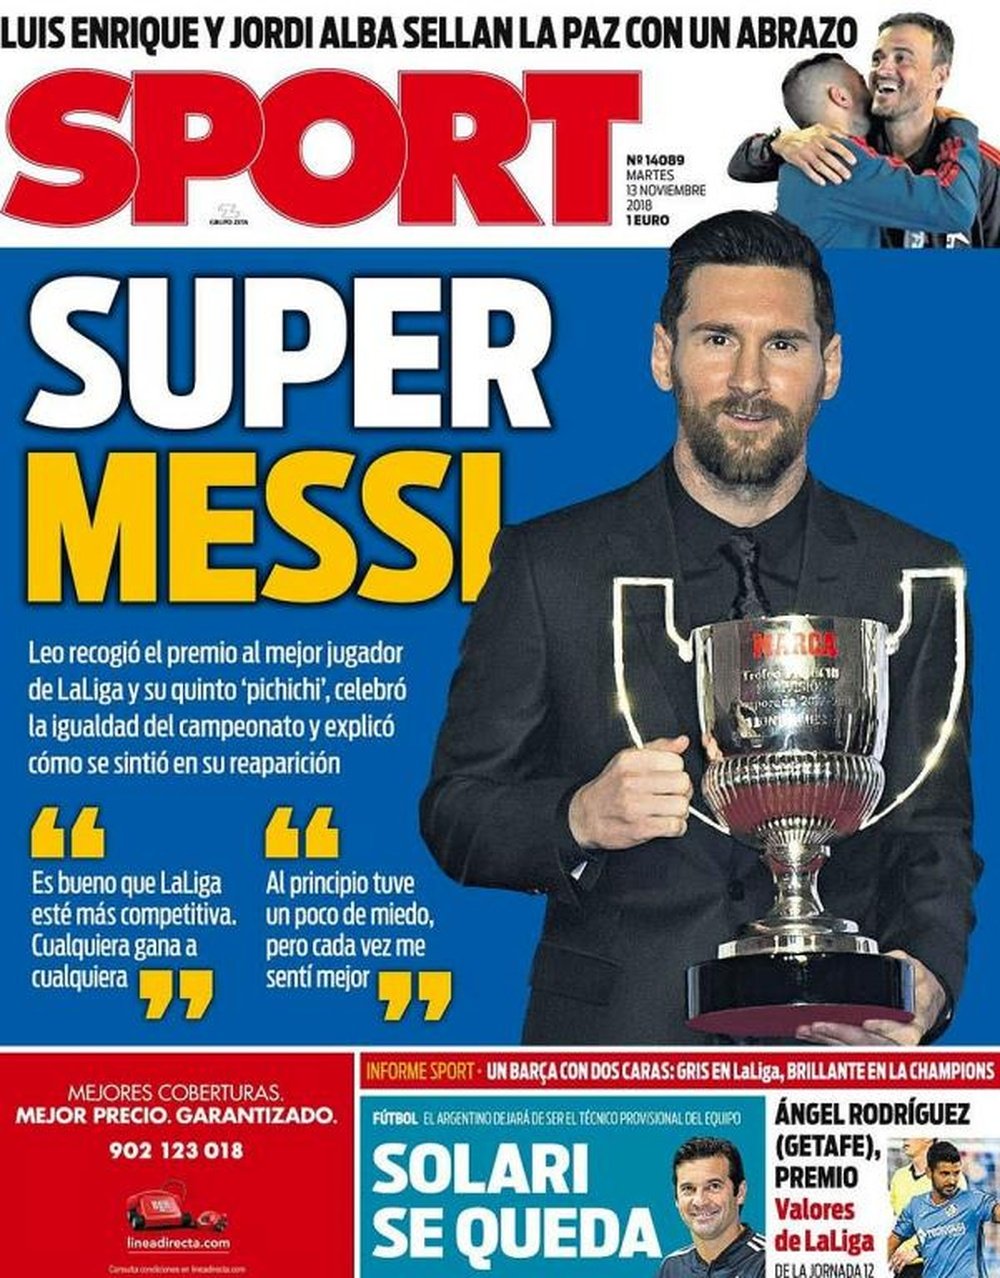 Capa do jornal 'Sport' de 13-11-18. Sport